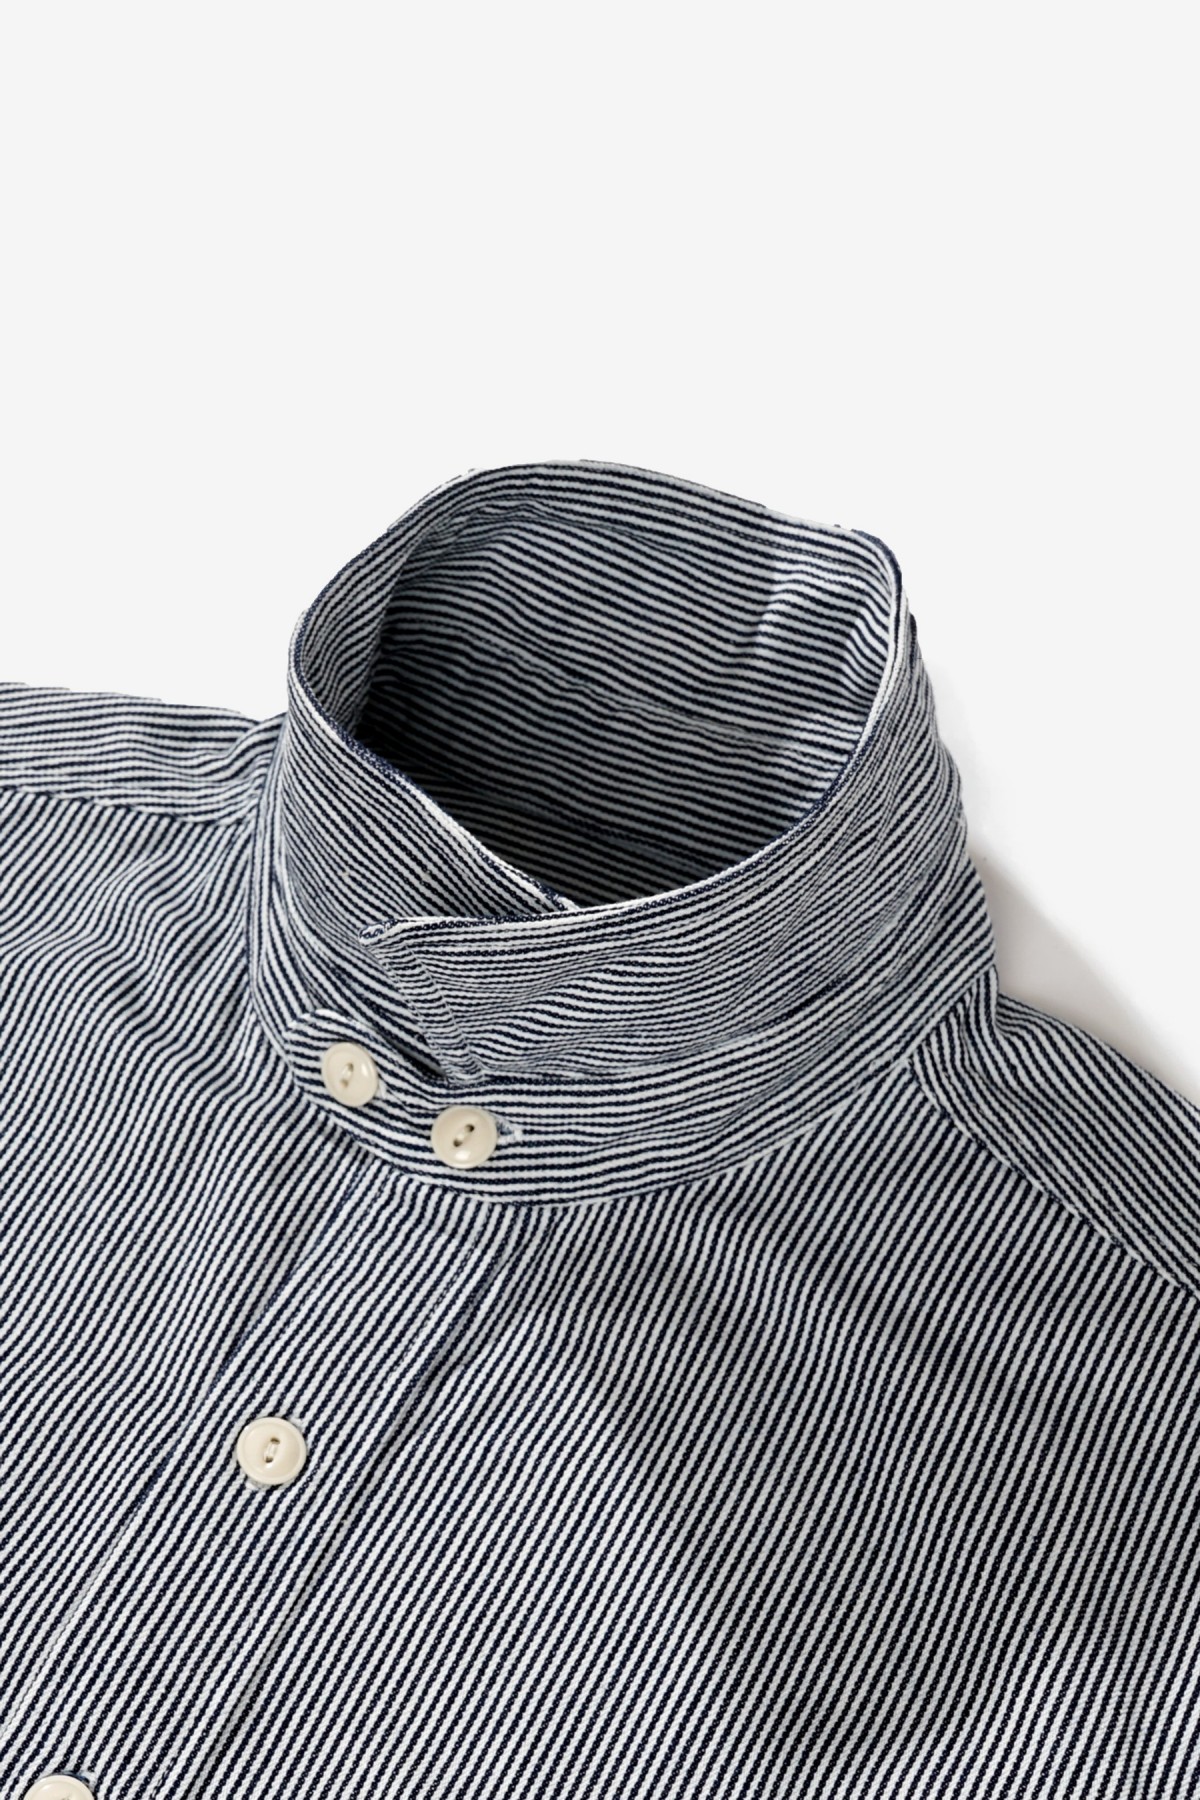 Engineered Garments Workaday Utility Shirt in Indigo White Cotton 6oz Railroad Stripe